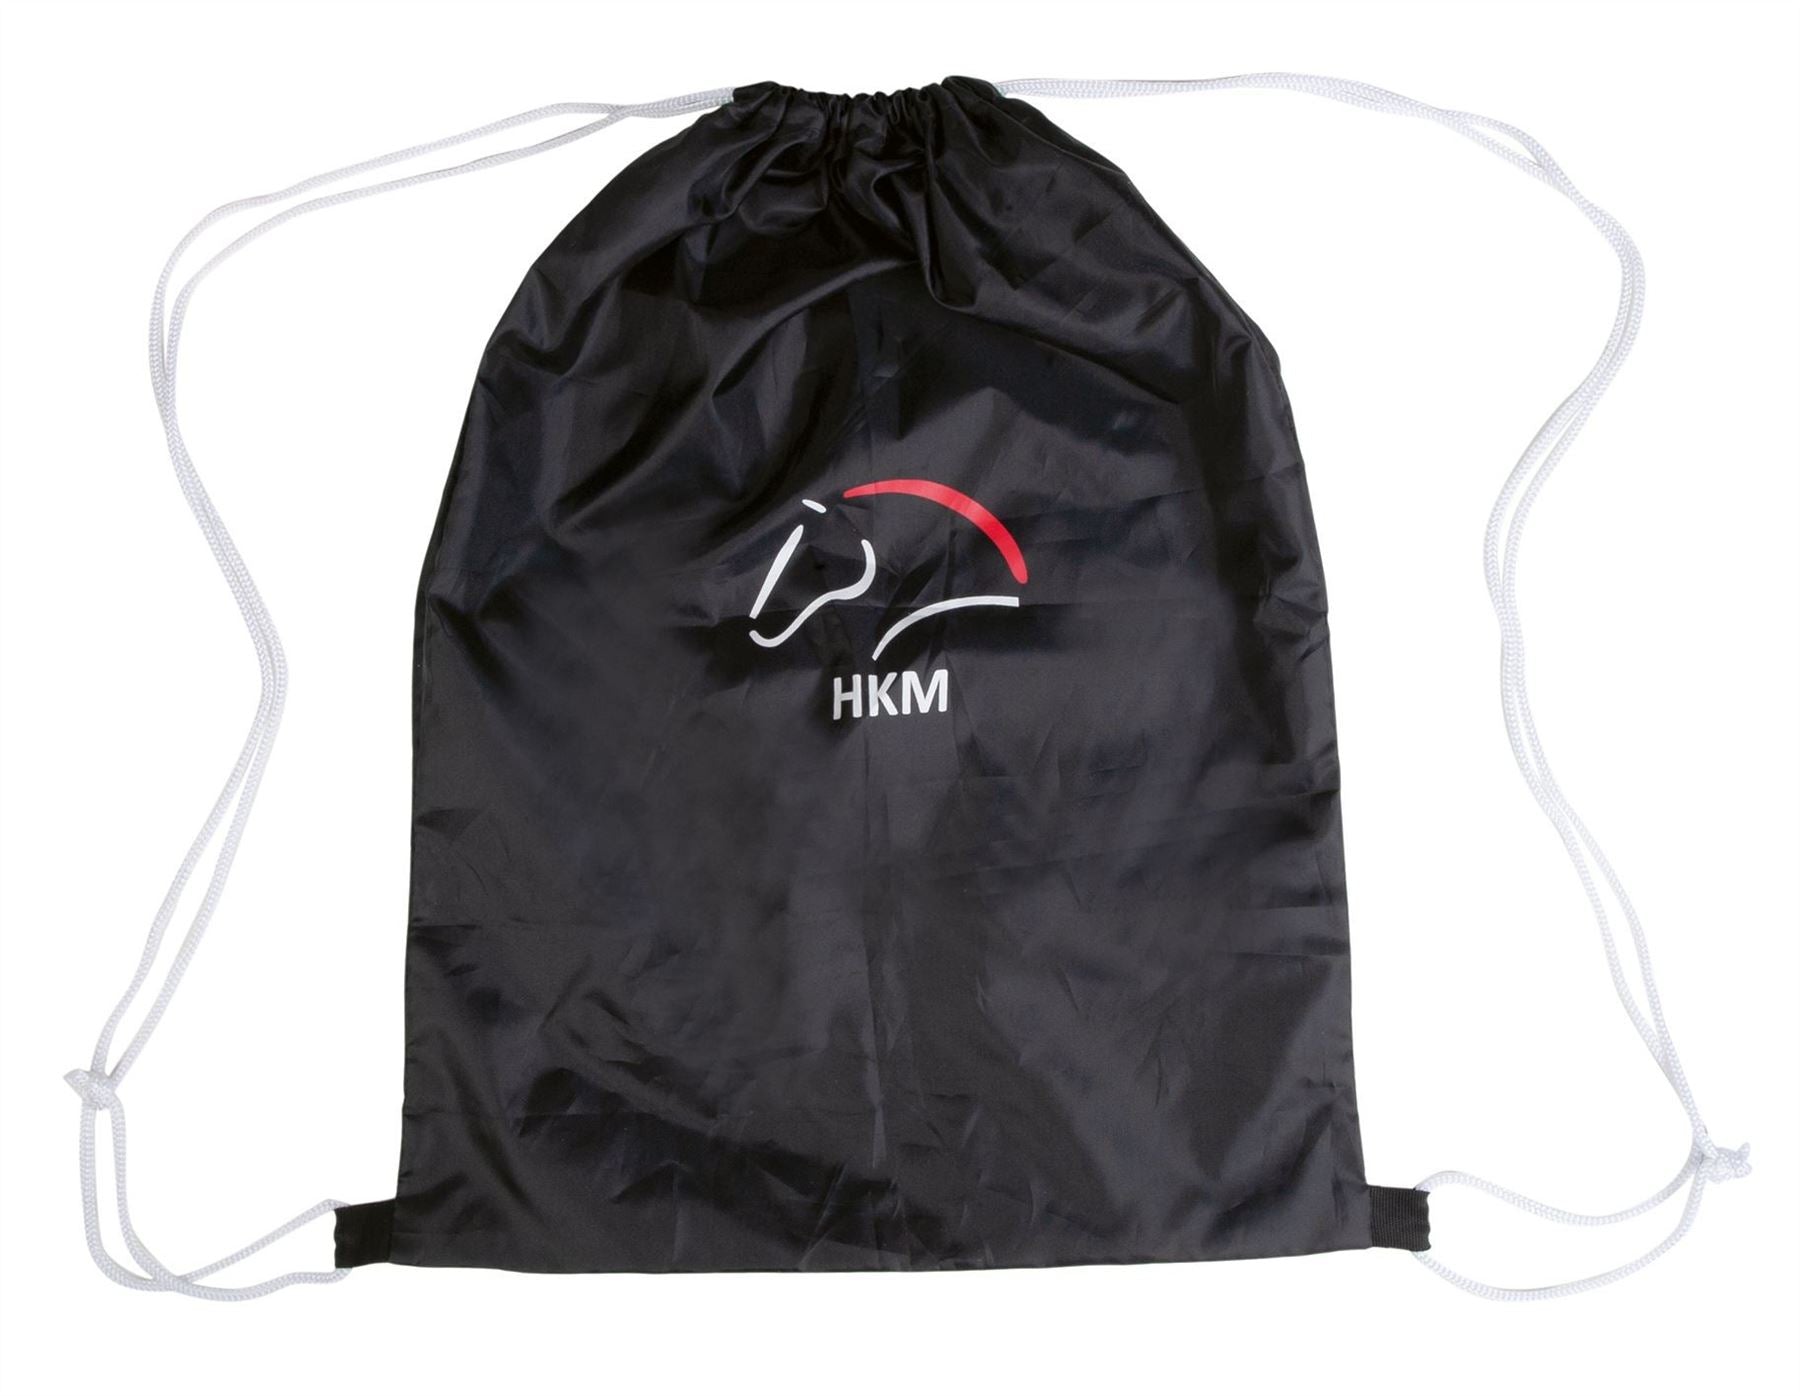 HKM Gym Bag Hkm - Just Horse Riders